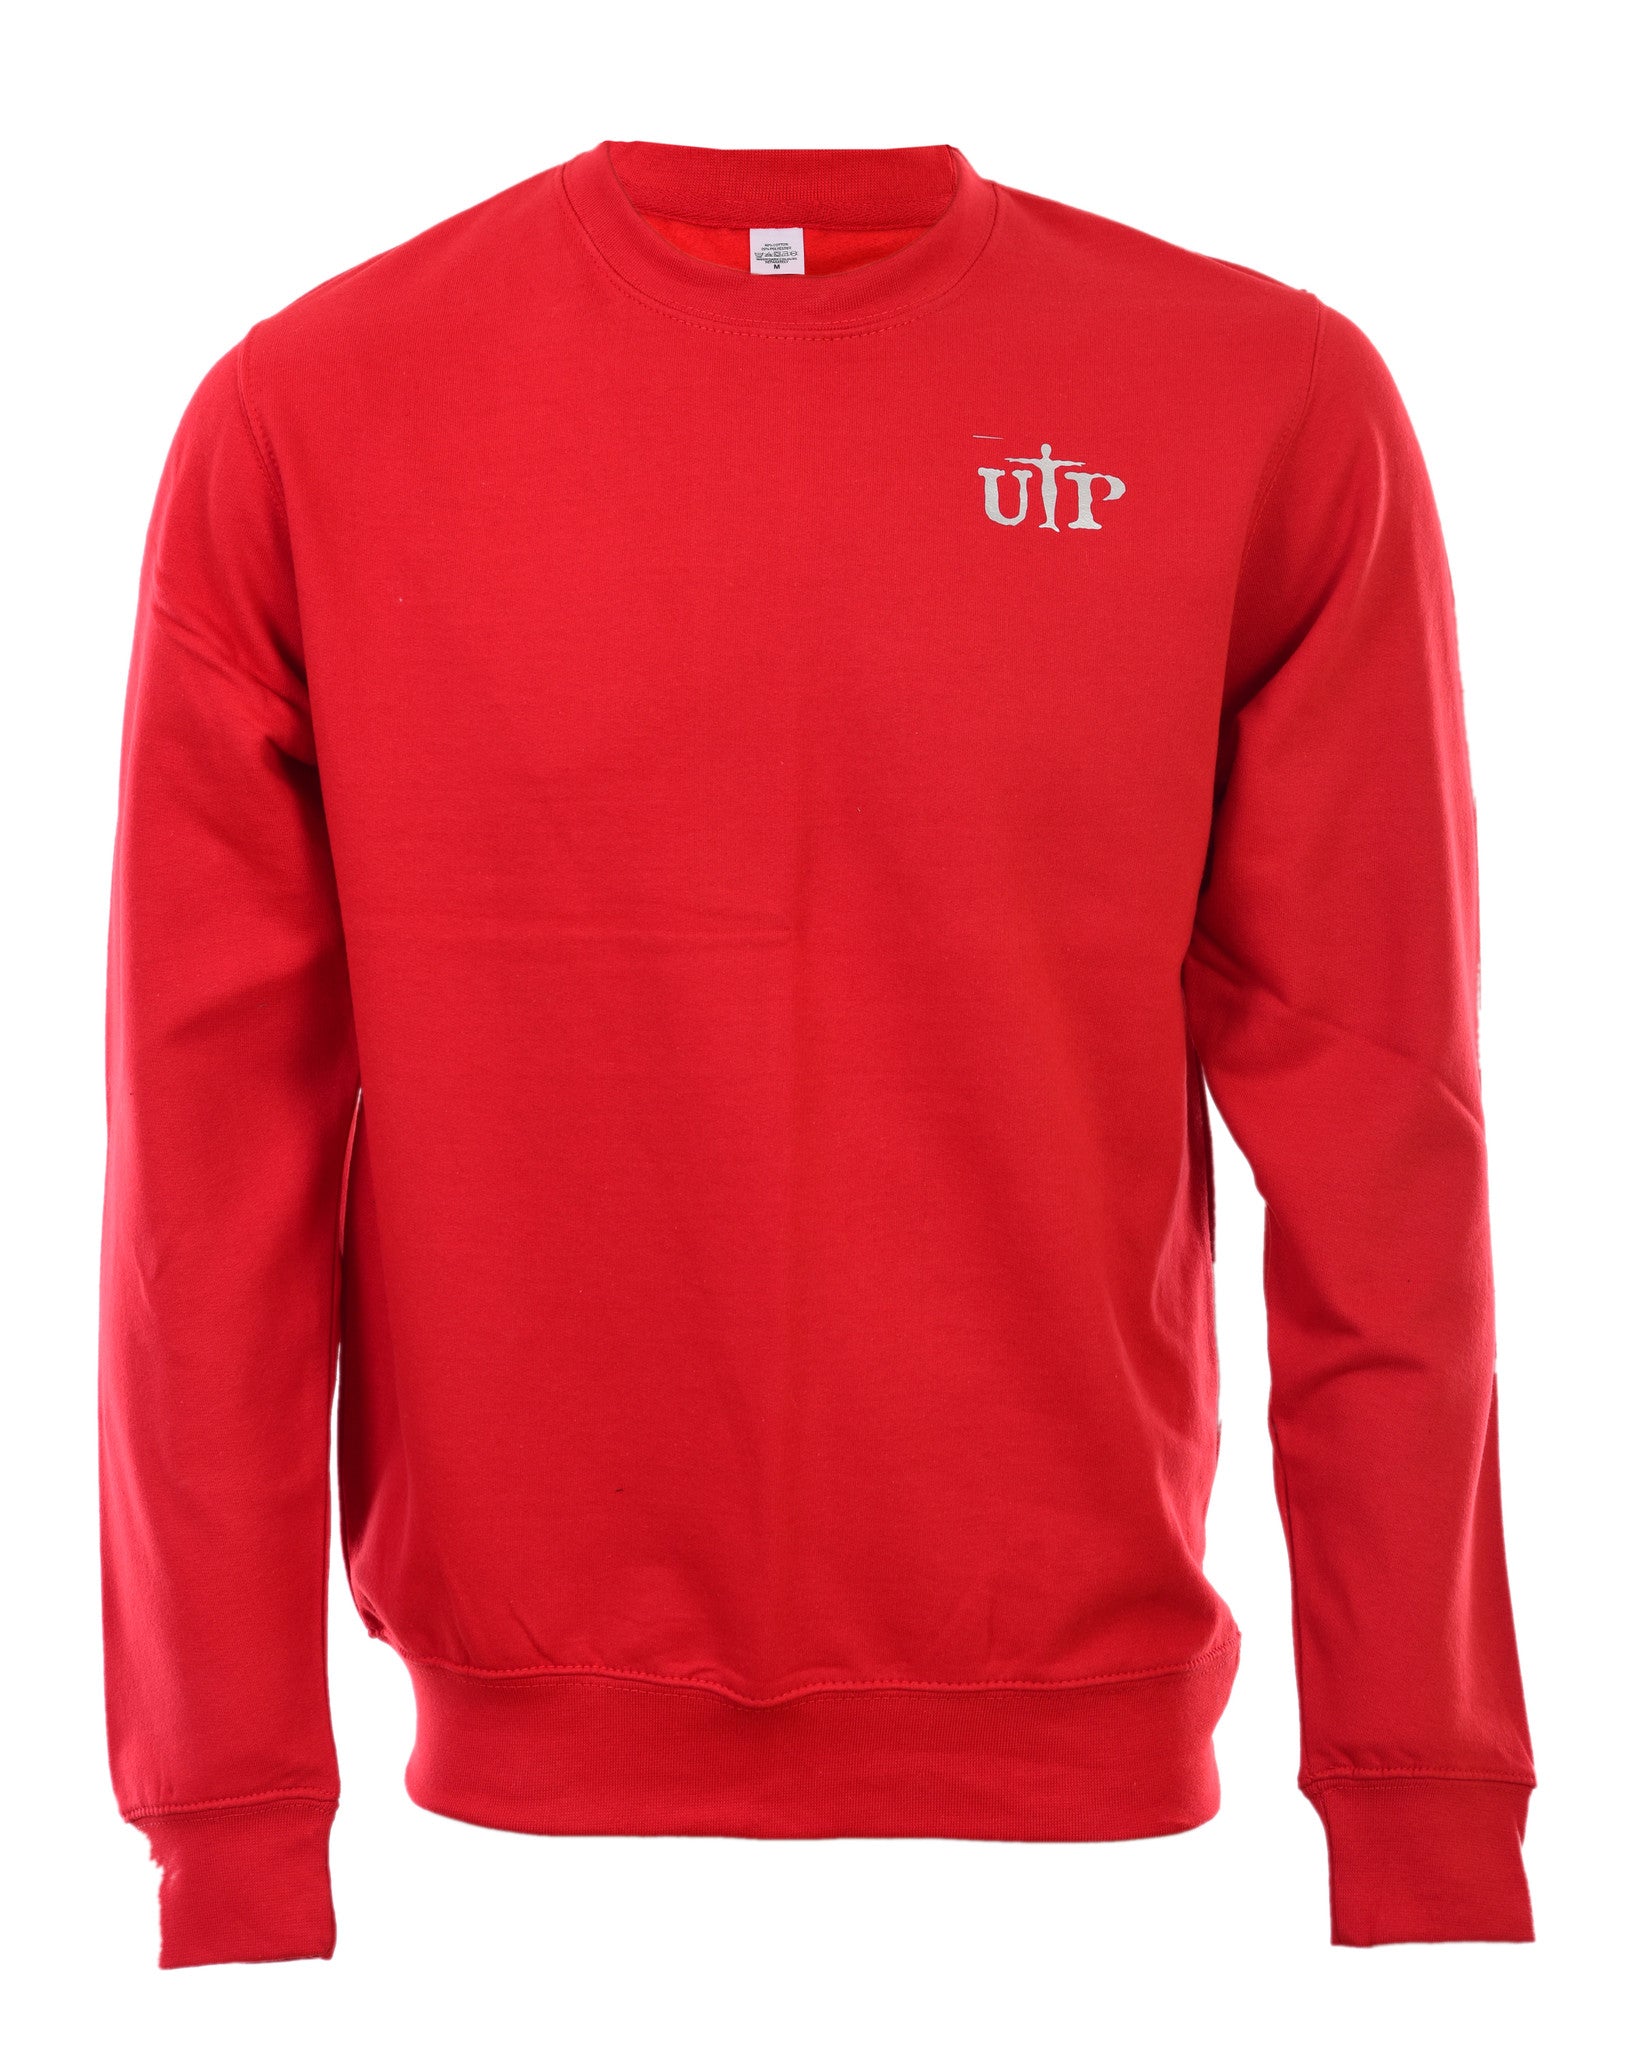 Unisex sweatshirts